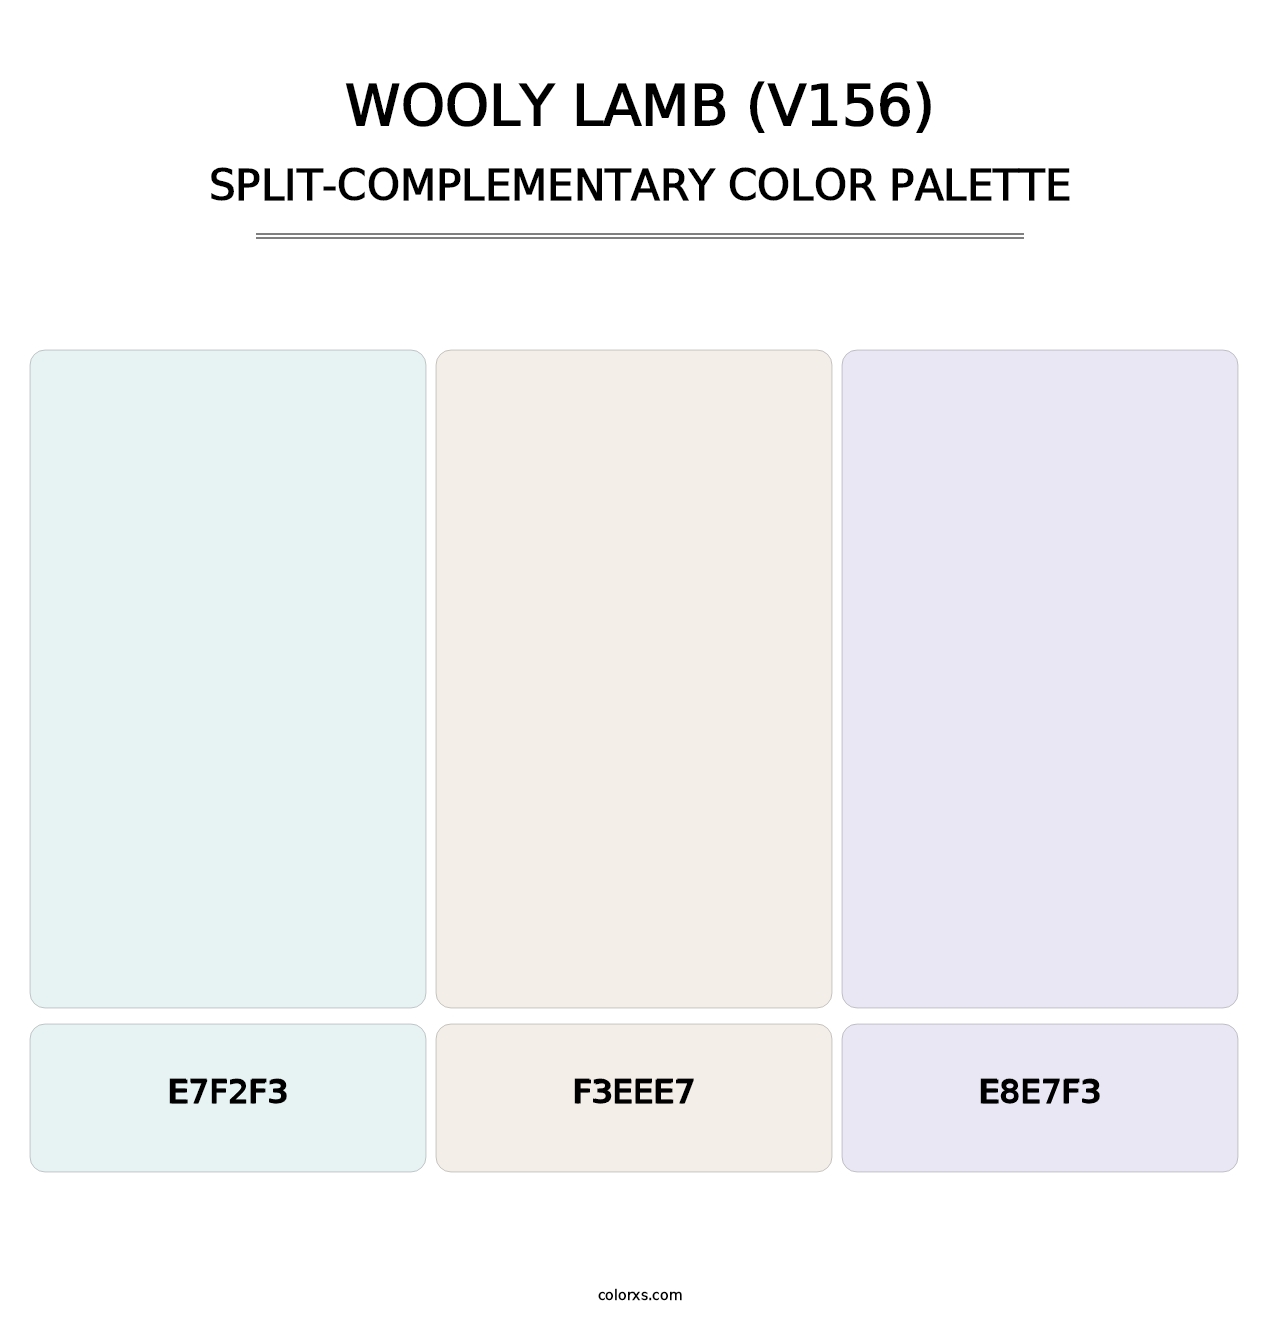 Wooly Lamb (V156) - Split-Complementary Color Palette